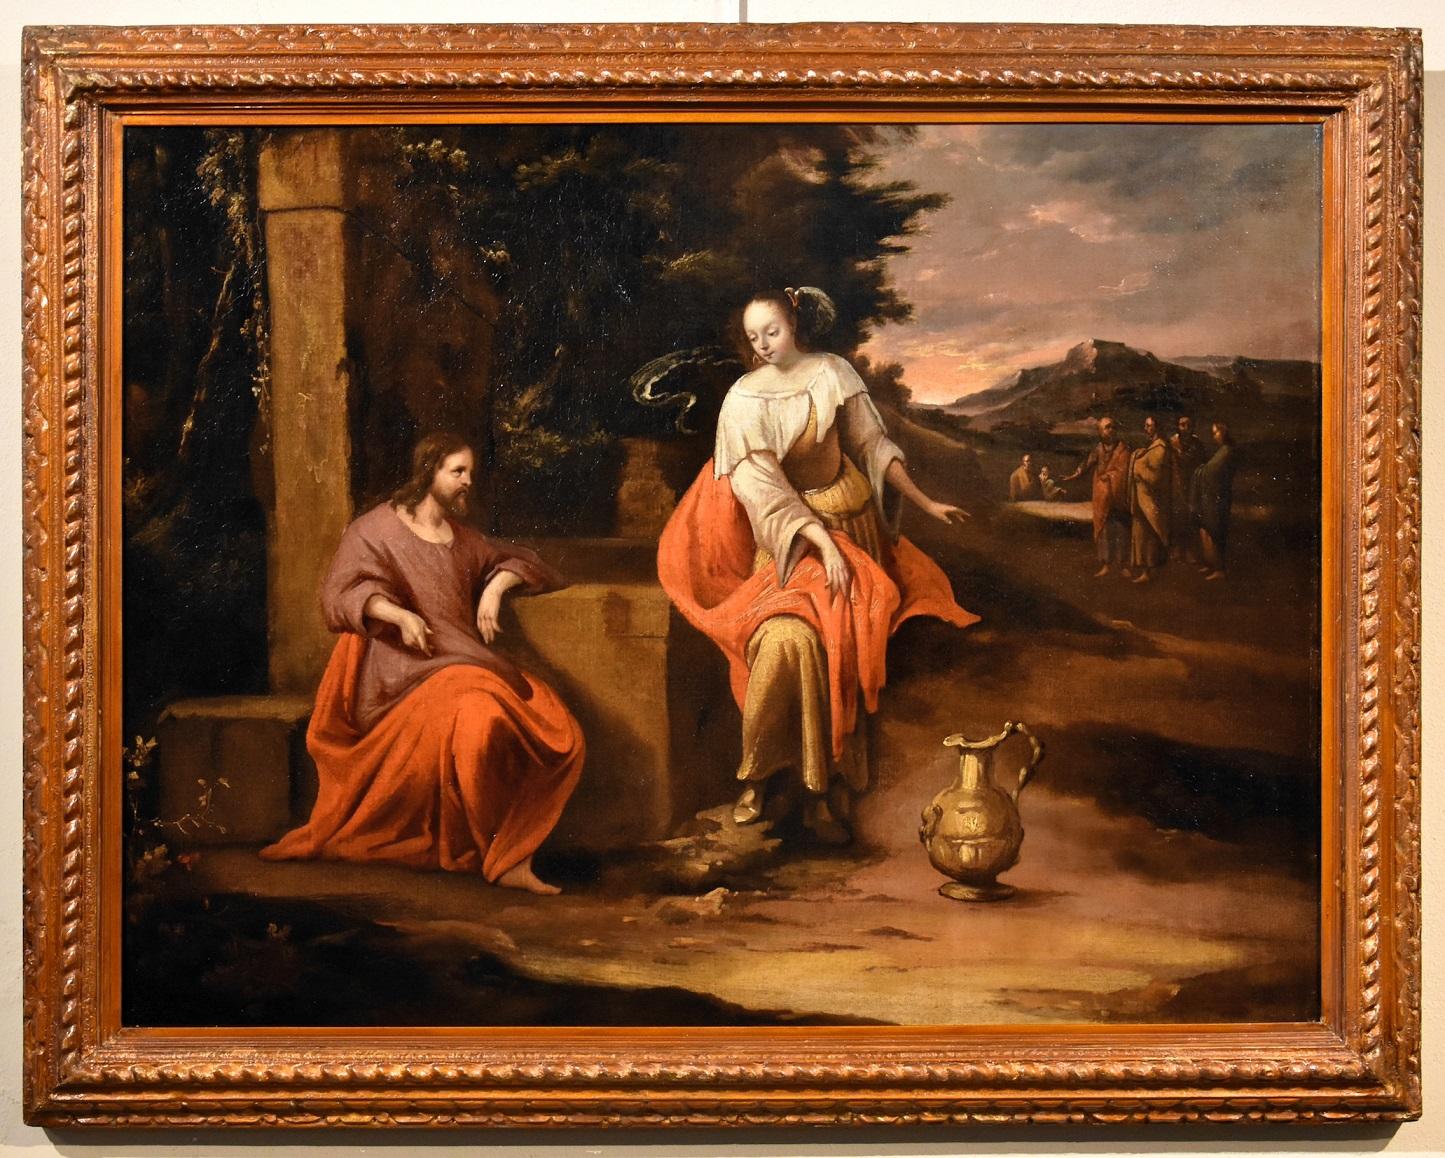 Christ Samaritan Paint Oil on canvas Oil on canvas Flemish Painter 17th Century - Painting by Flemish painter of the 17th century